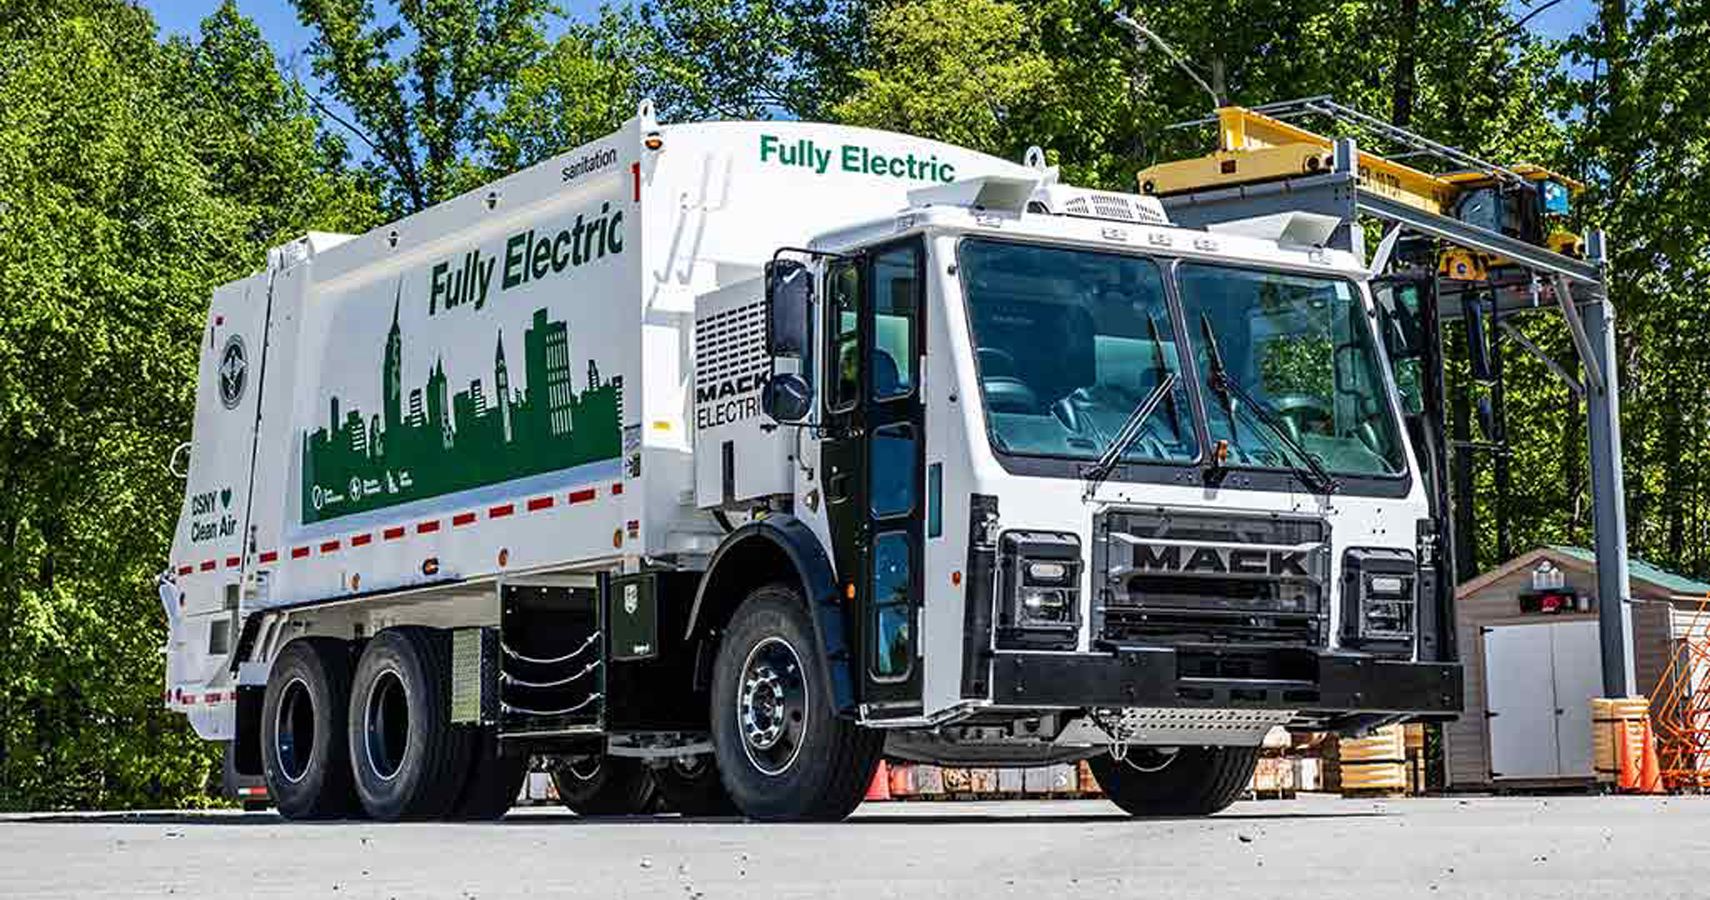 Mack LR Electric refuse model in action